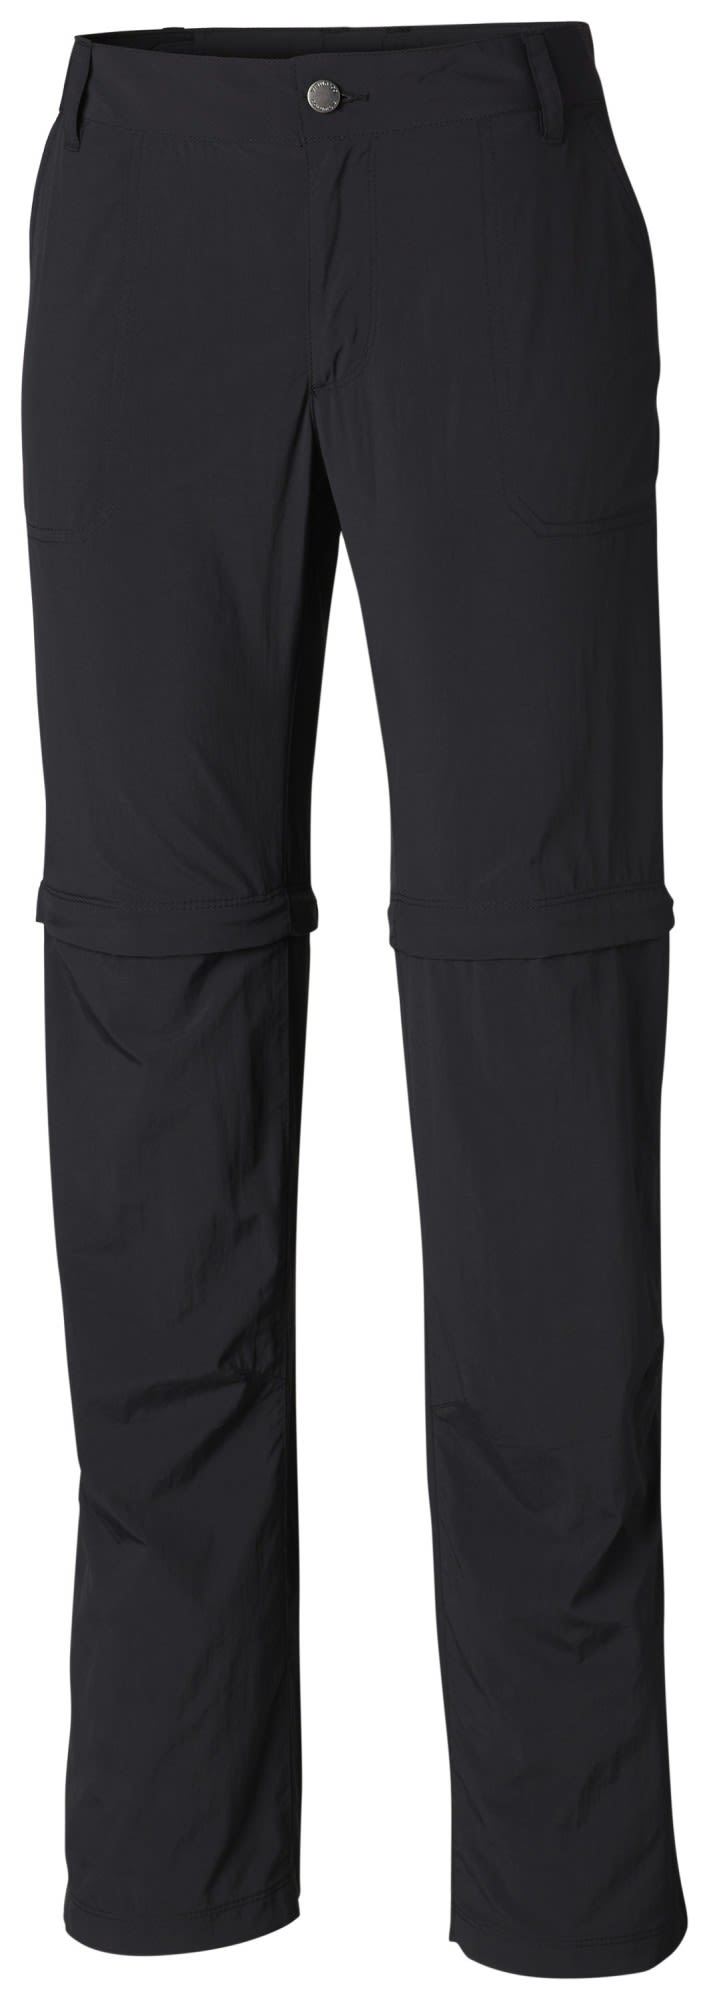 Columbia Silver Ridge 2-0 Convertible Pant Schwarz- Female Softshellhosen- Grsse 10 - Short - Farbe Black unter Columbia